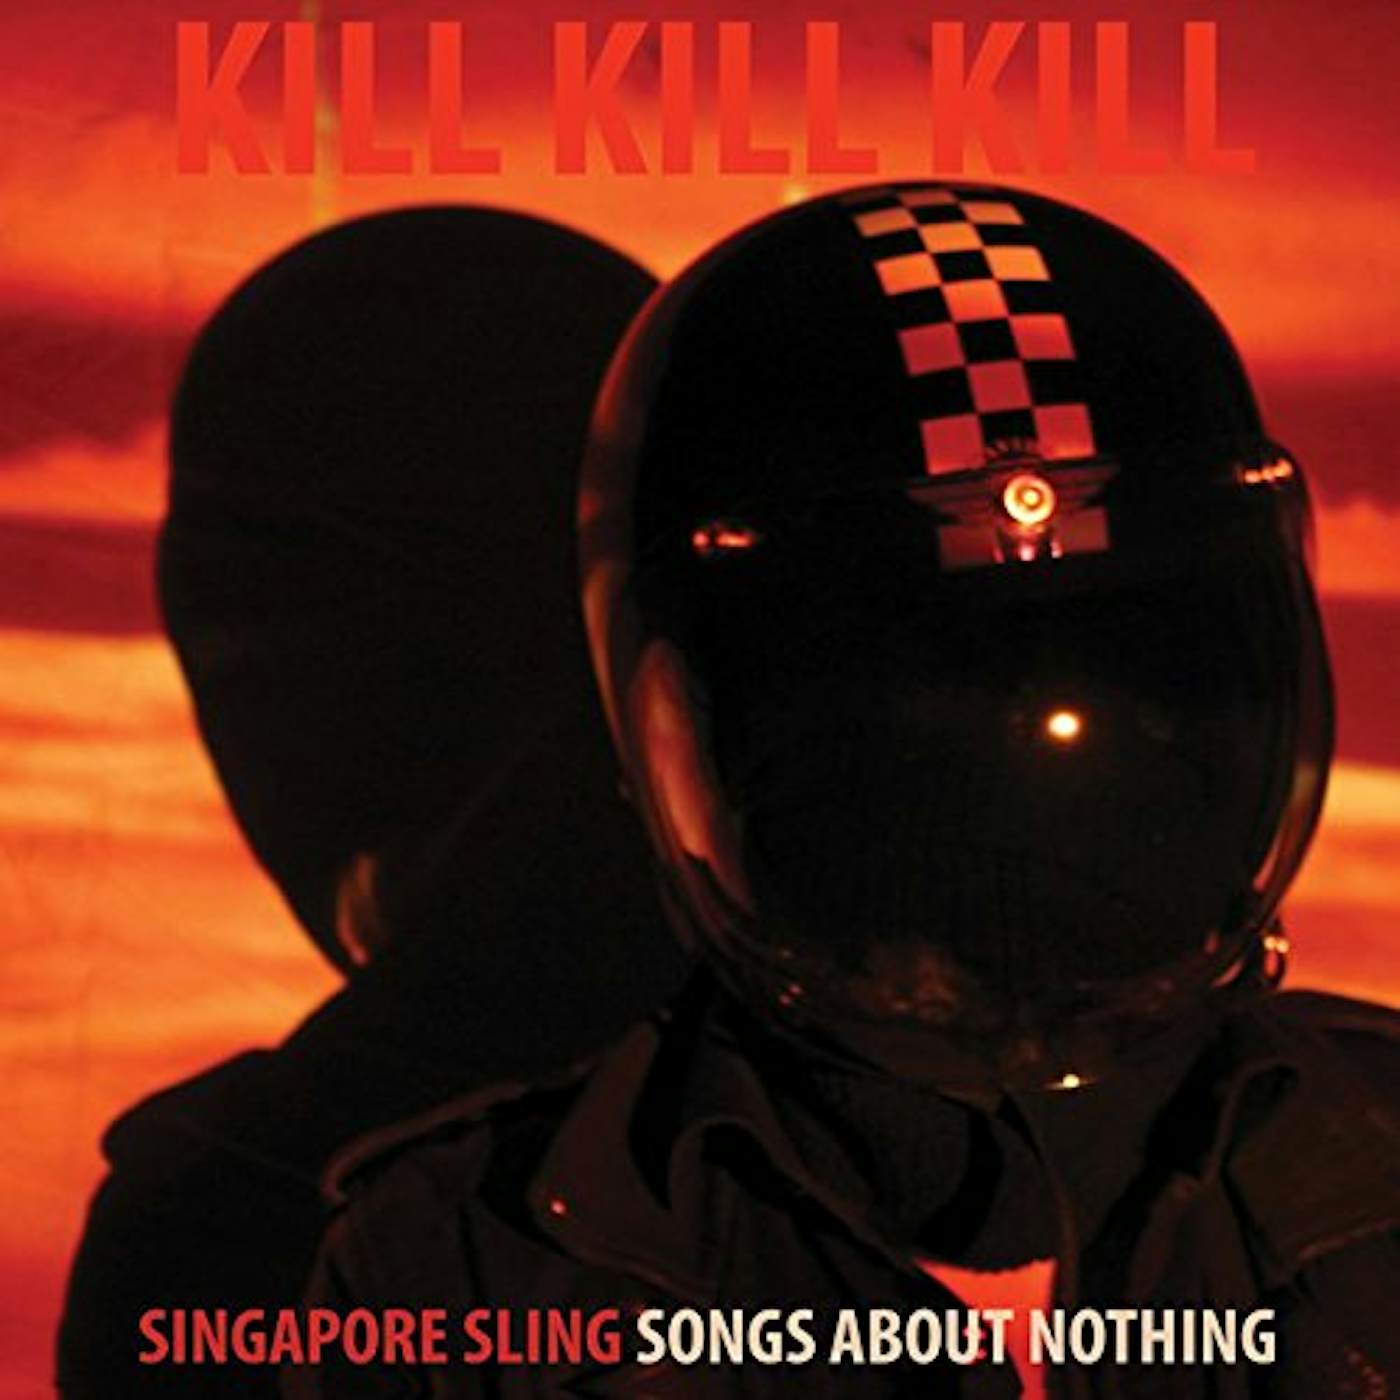 Singapore Sling Kill Kill Kill (Songs About Nothing) Vinyl Record